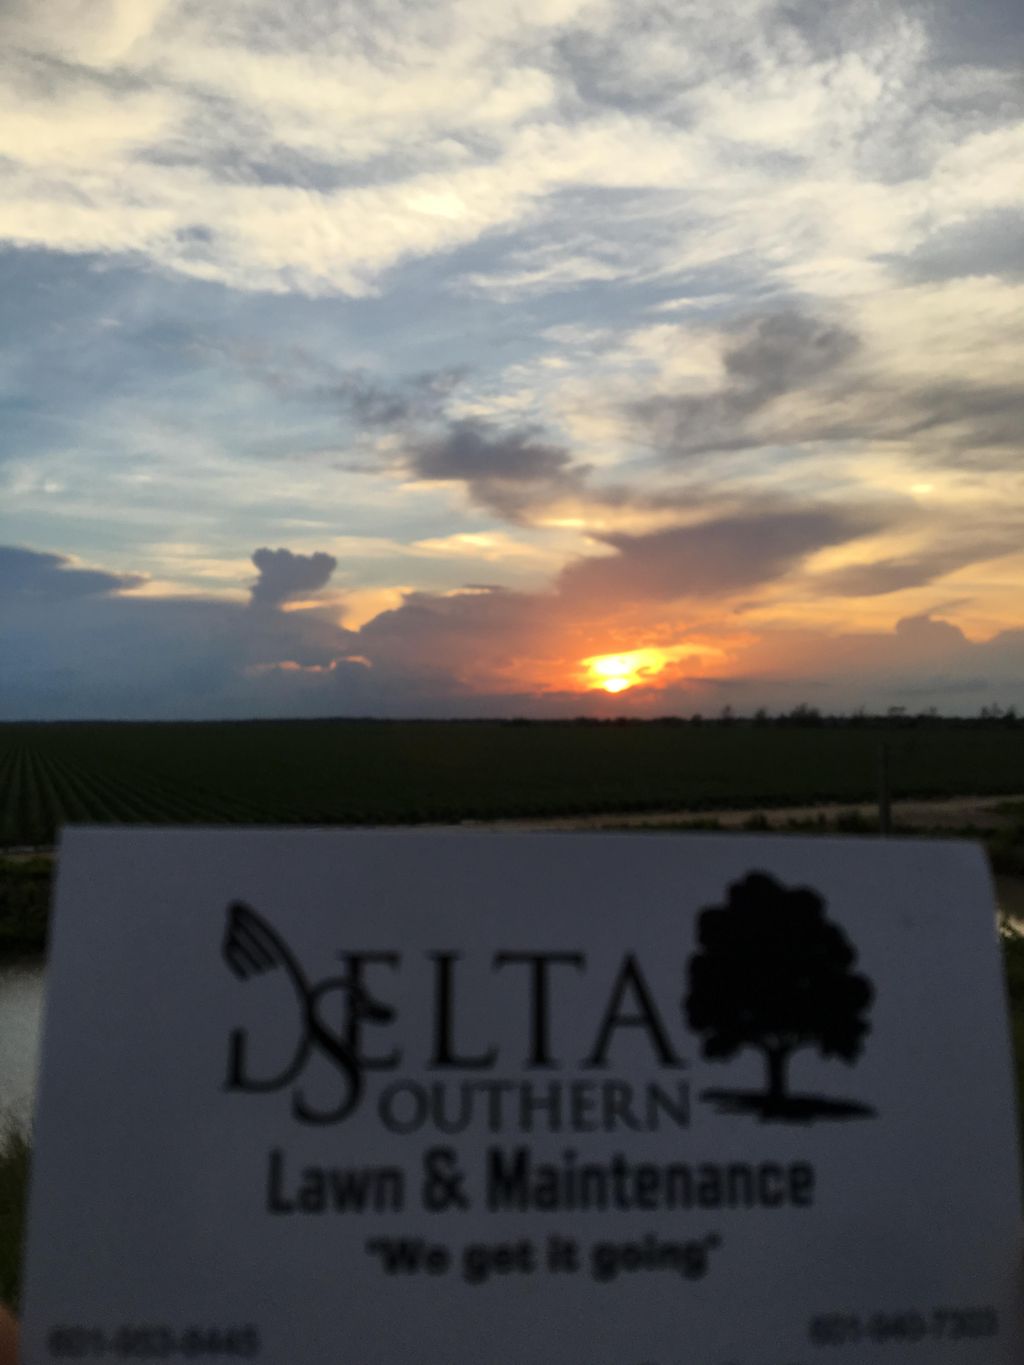 Delta Southern Lawn & Maintenace LLC